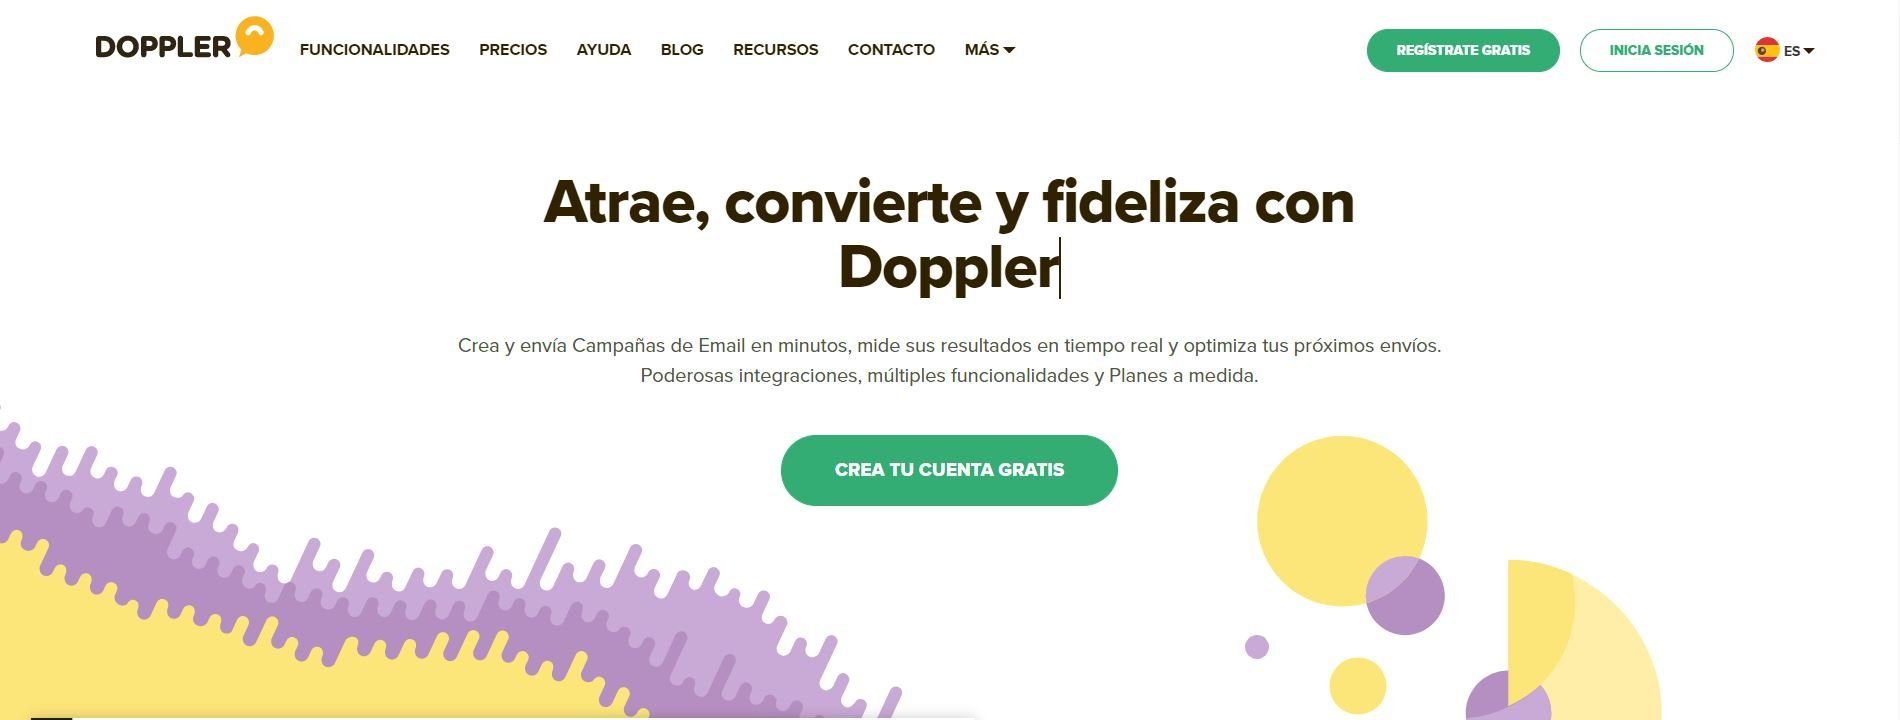 Doppler herramienta de email marketing